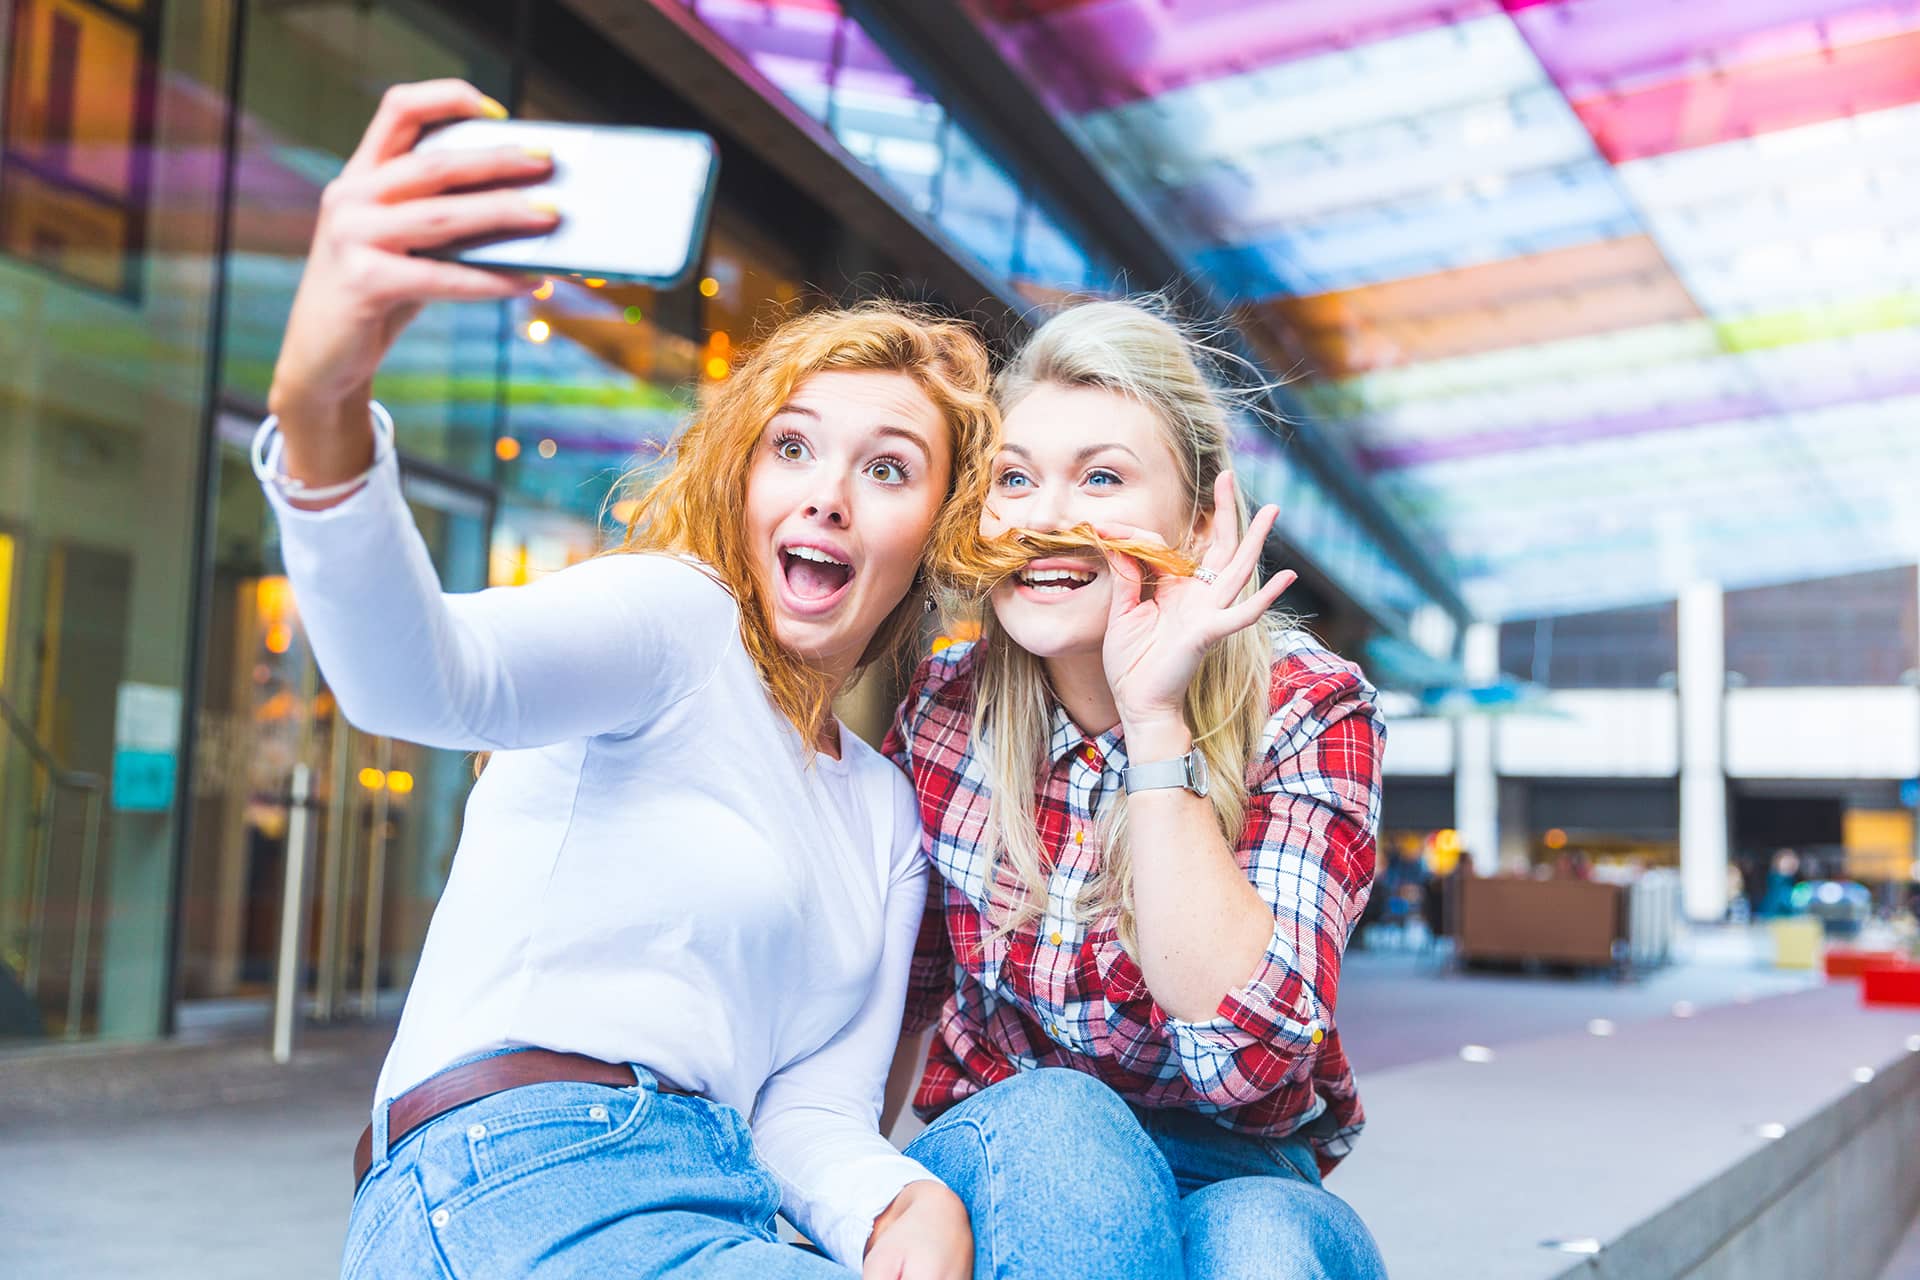 Overseas student "selfie" in London